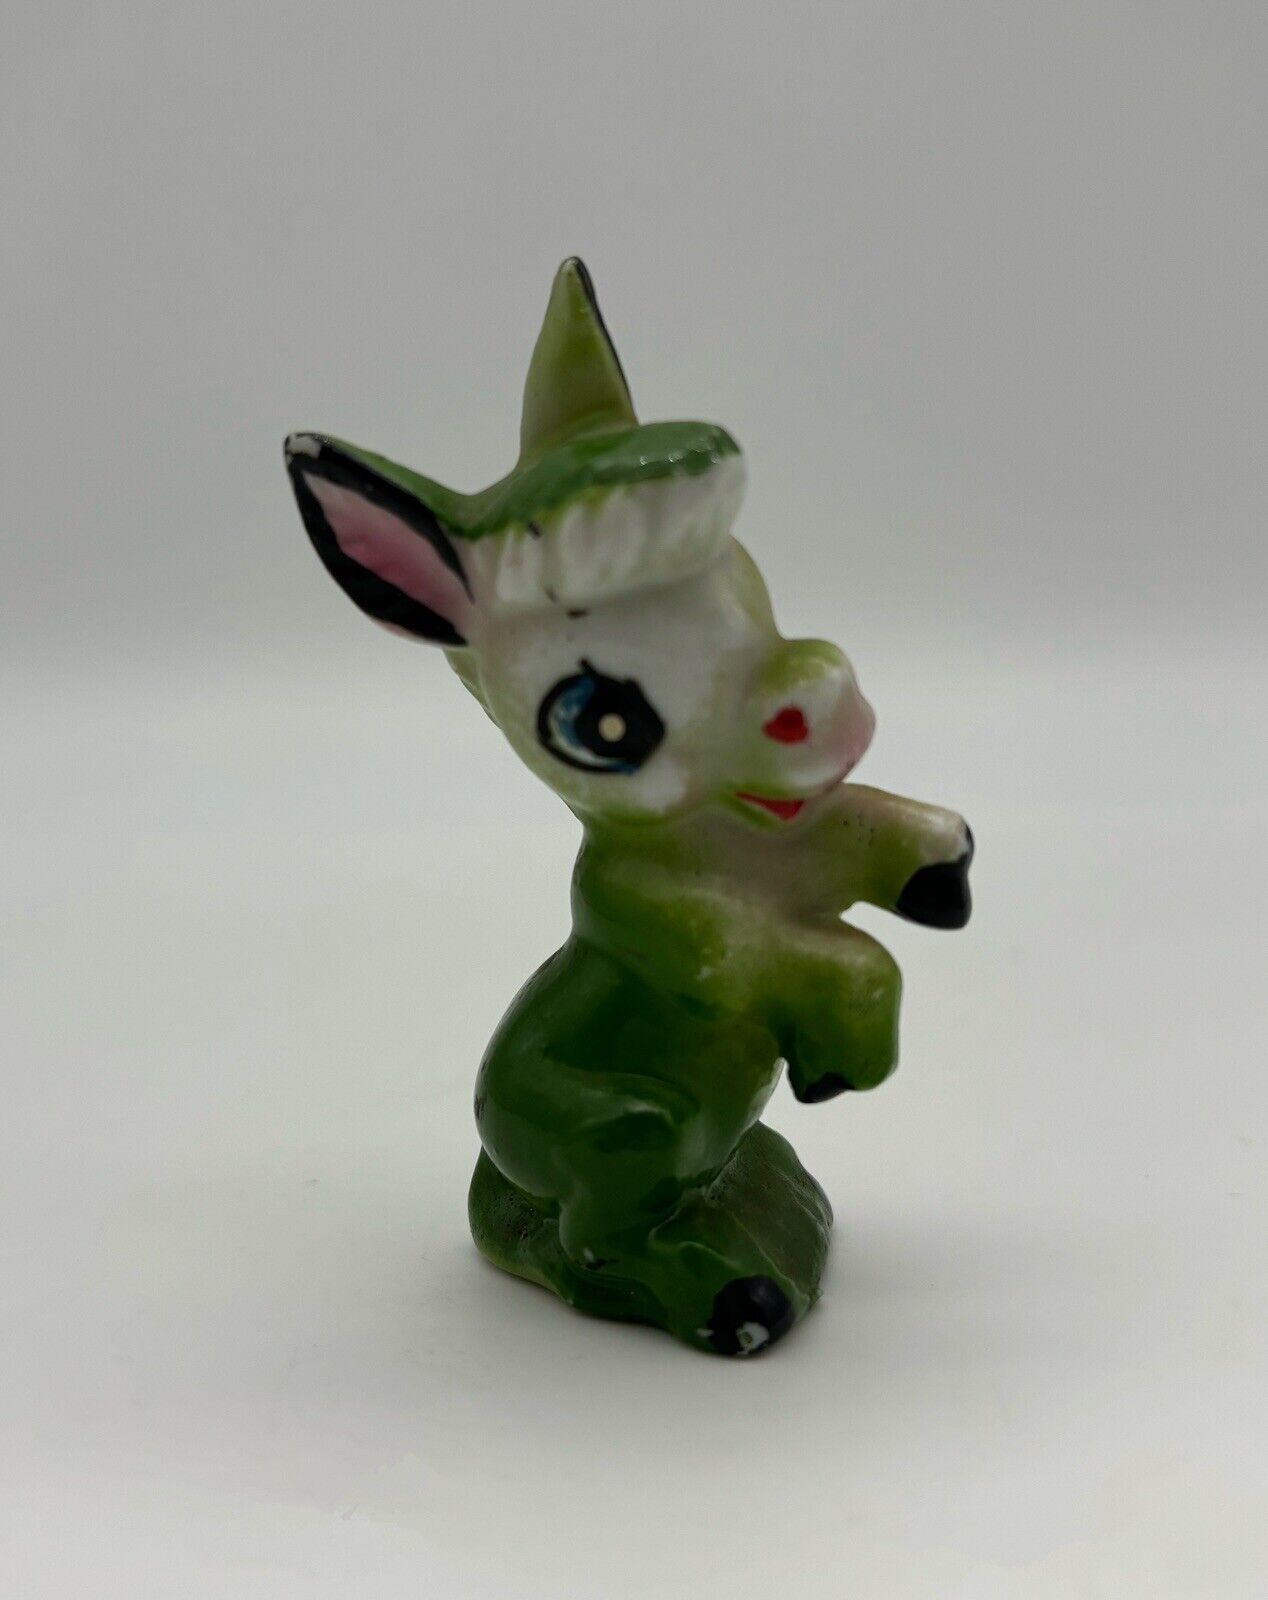 Vintage Anthropomorphic Donkey Green Standing Japan Ceramic Figurine Kitschy 2”